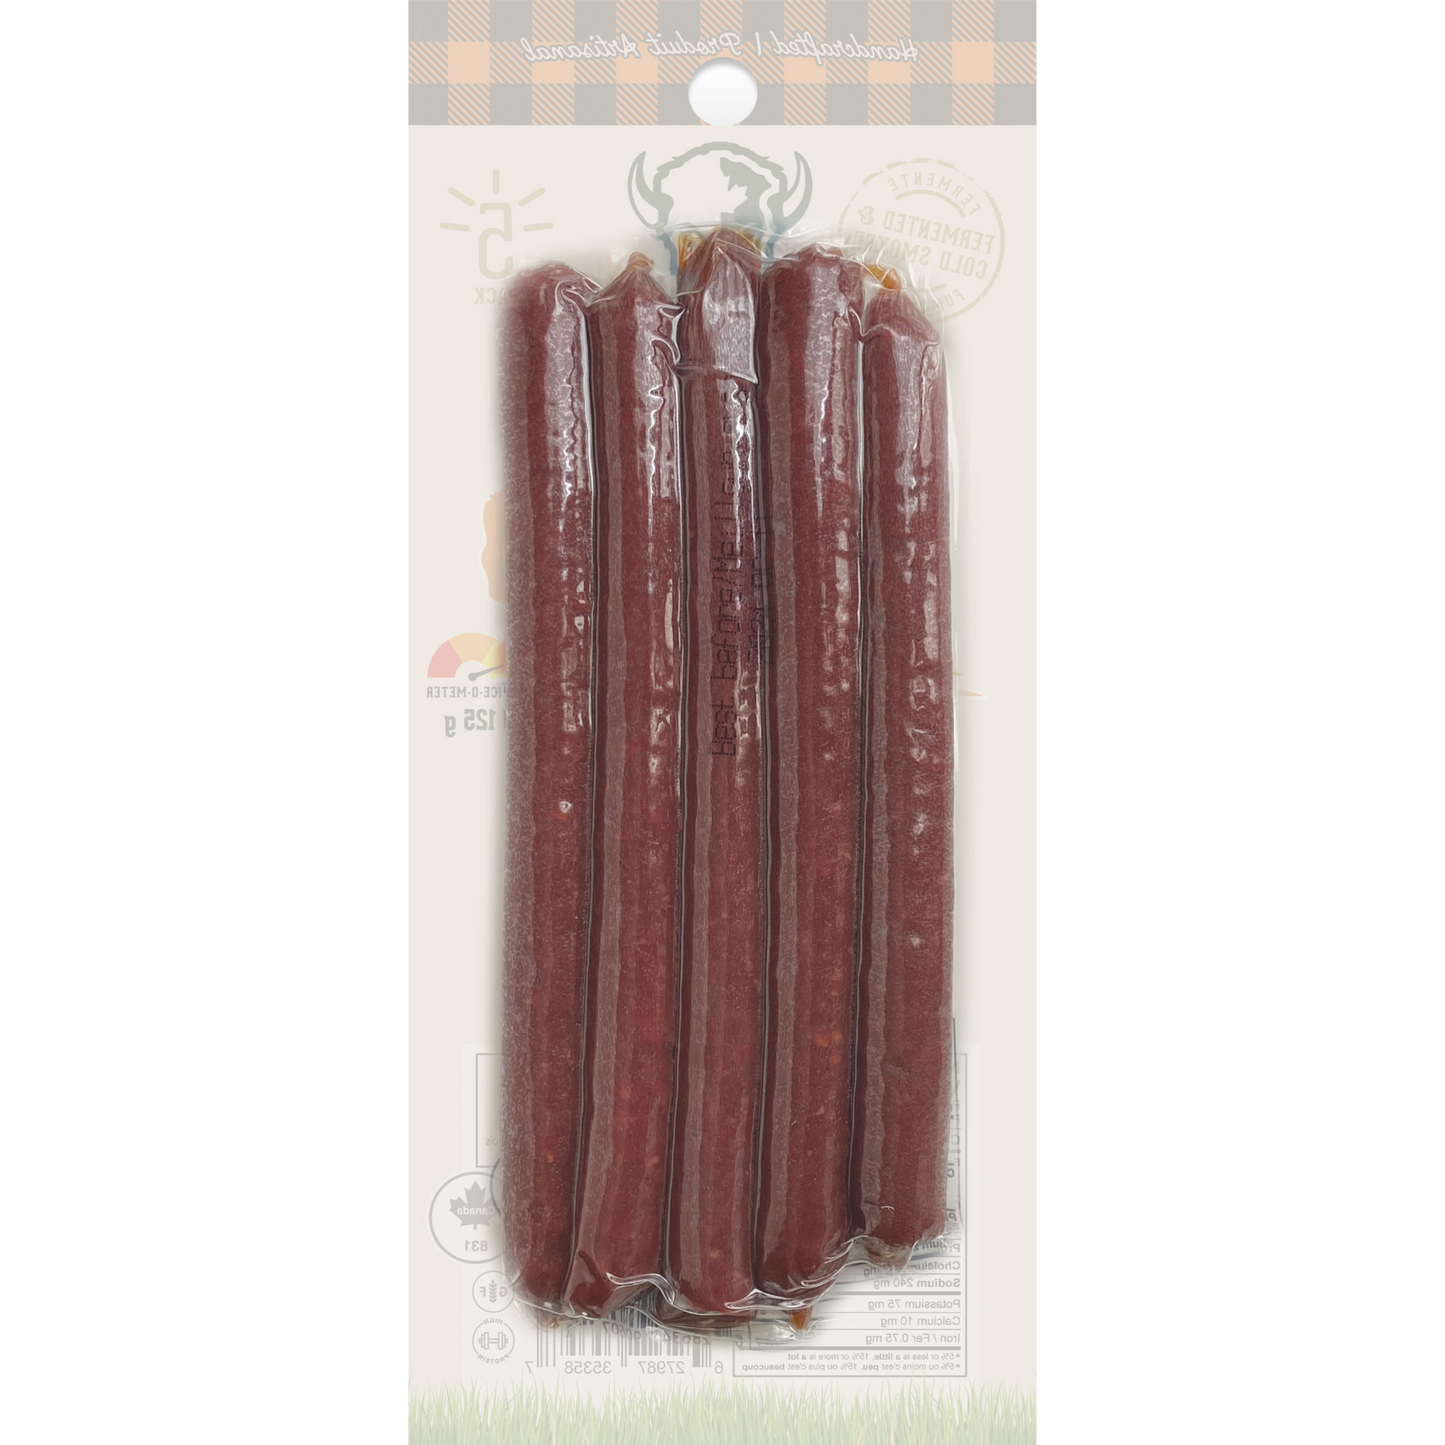 Original Flavor 5-Pack - Healthy Bison Meat Snack Sticks - BUFF